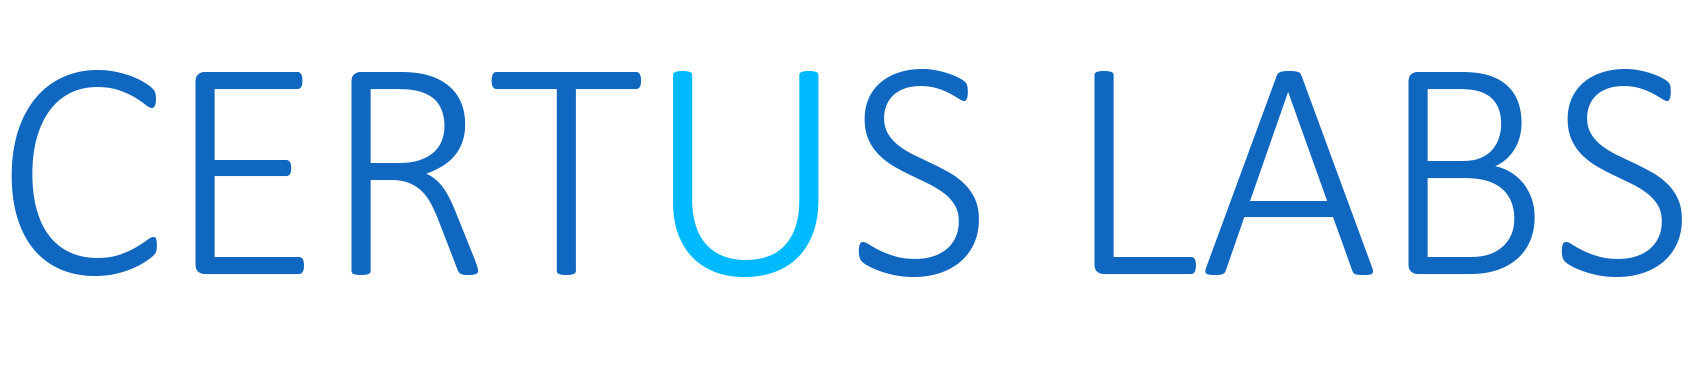 Certus Labs Brand Logo